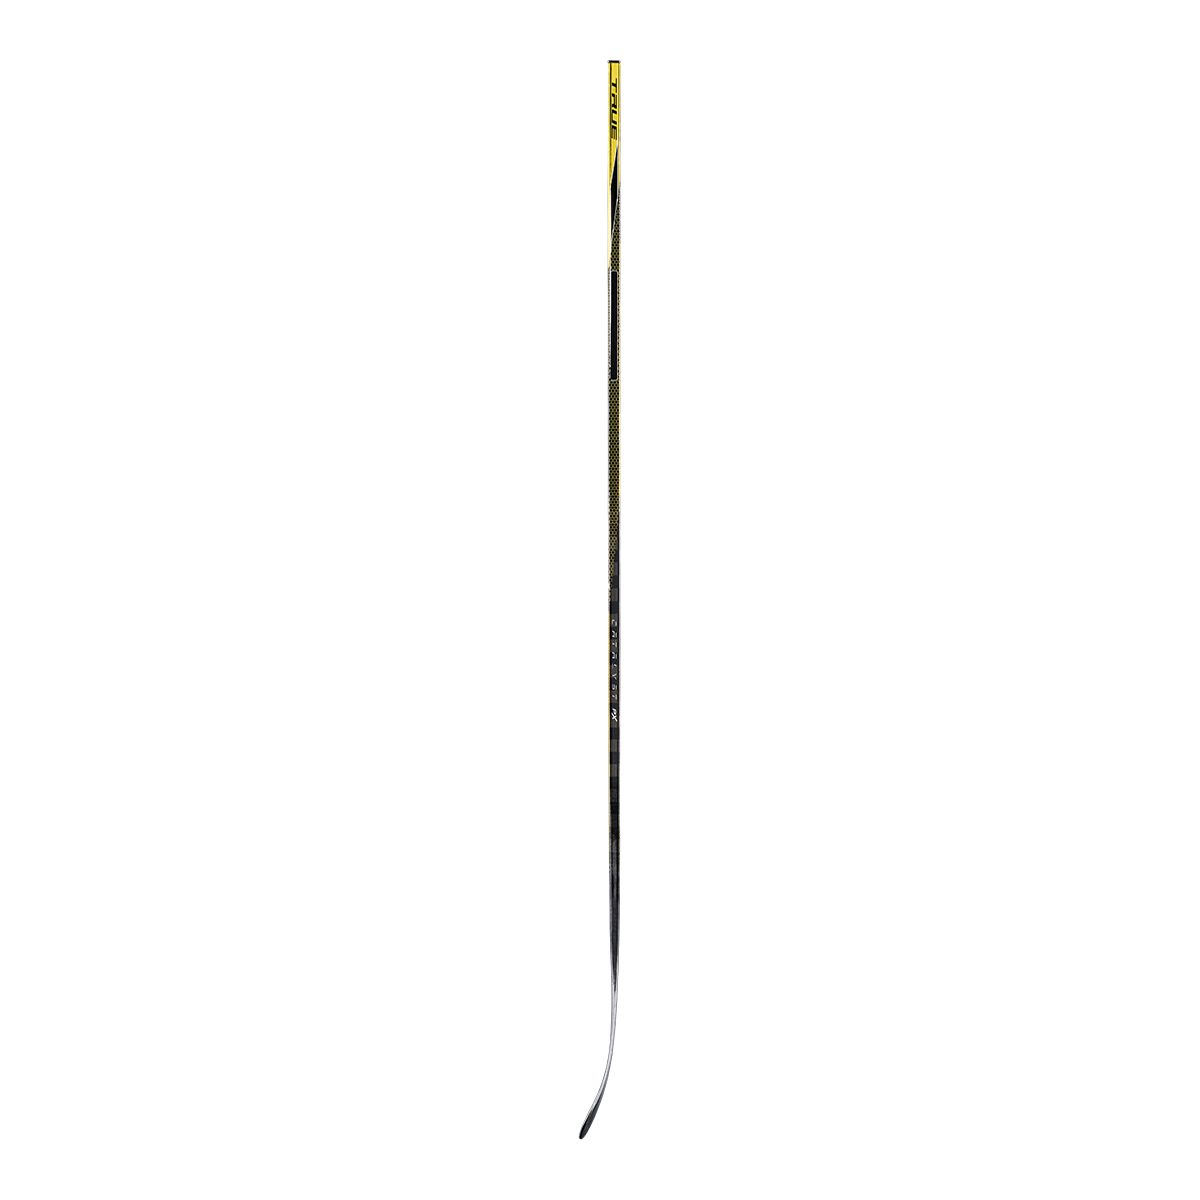 True Catalyst PX Grip Junior Hockey Stick - 50 Flex